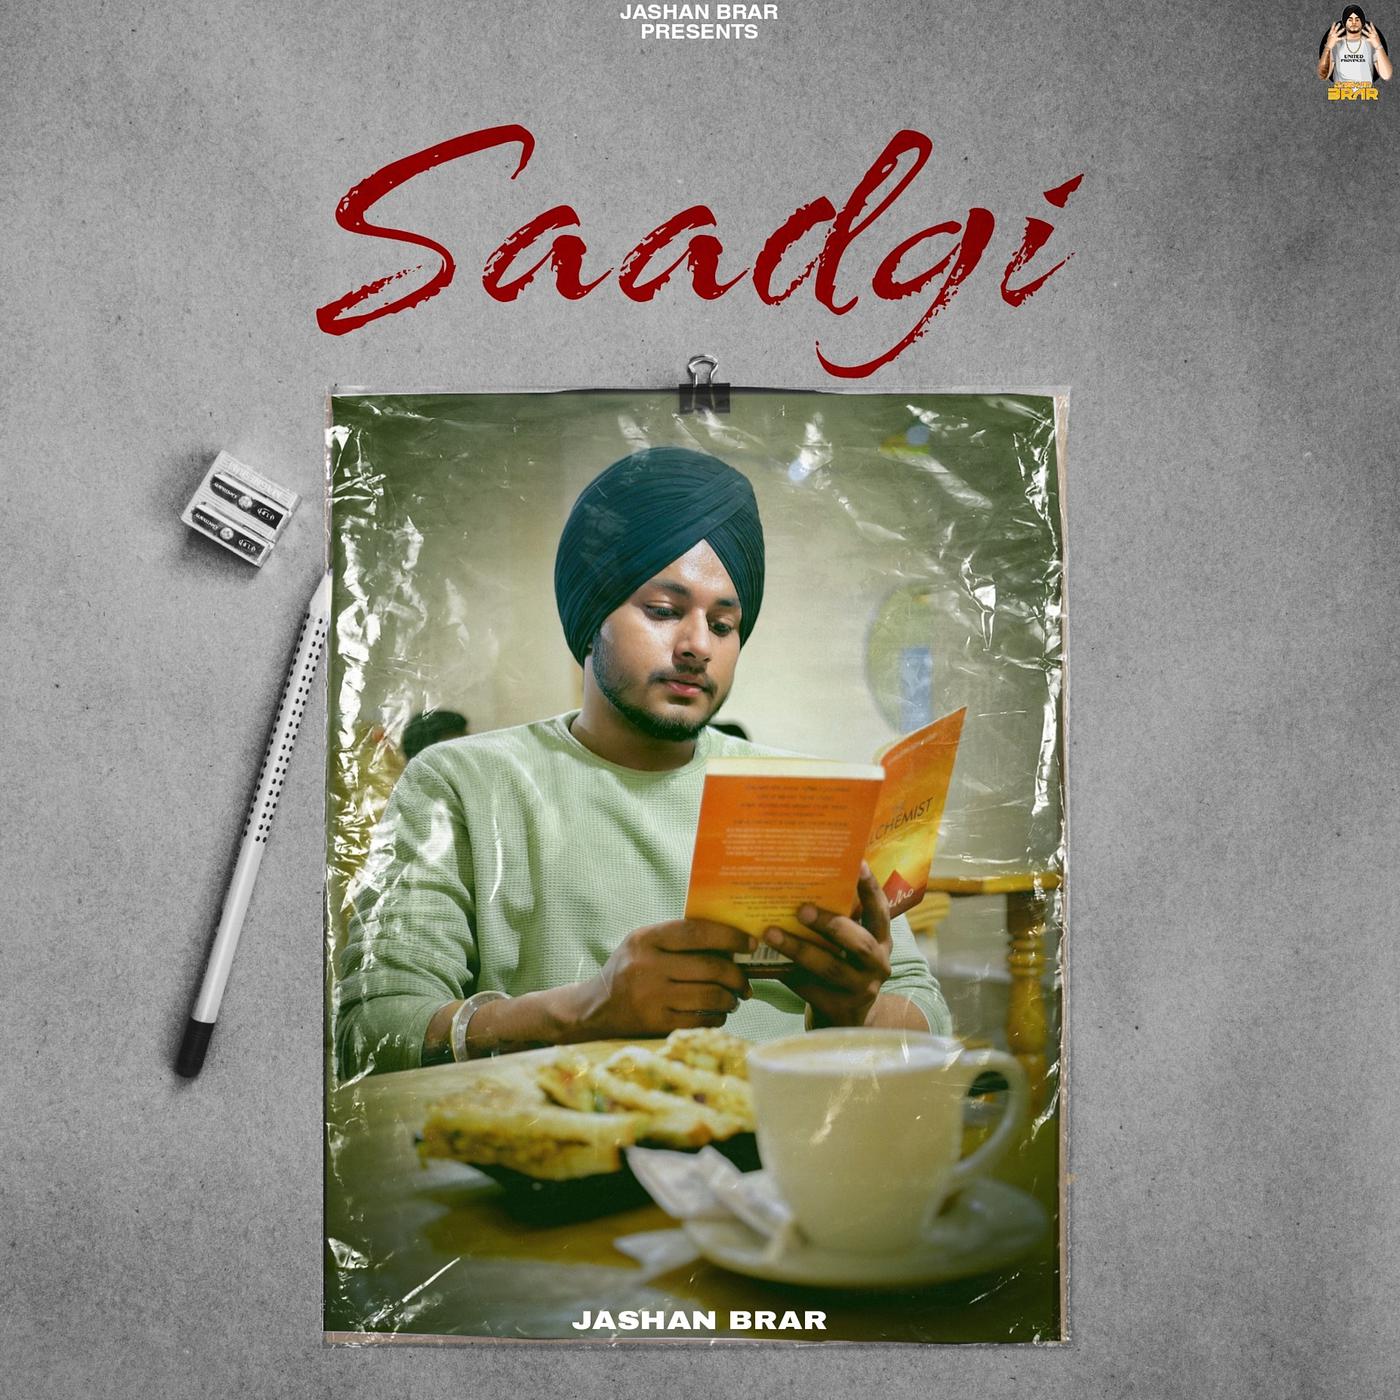 Постер альбома Saadgi